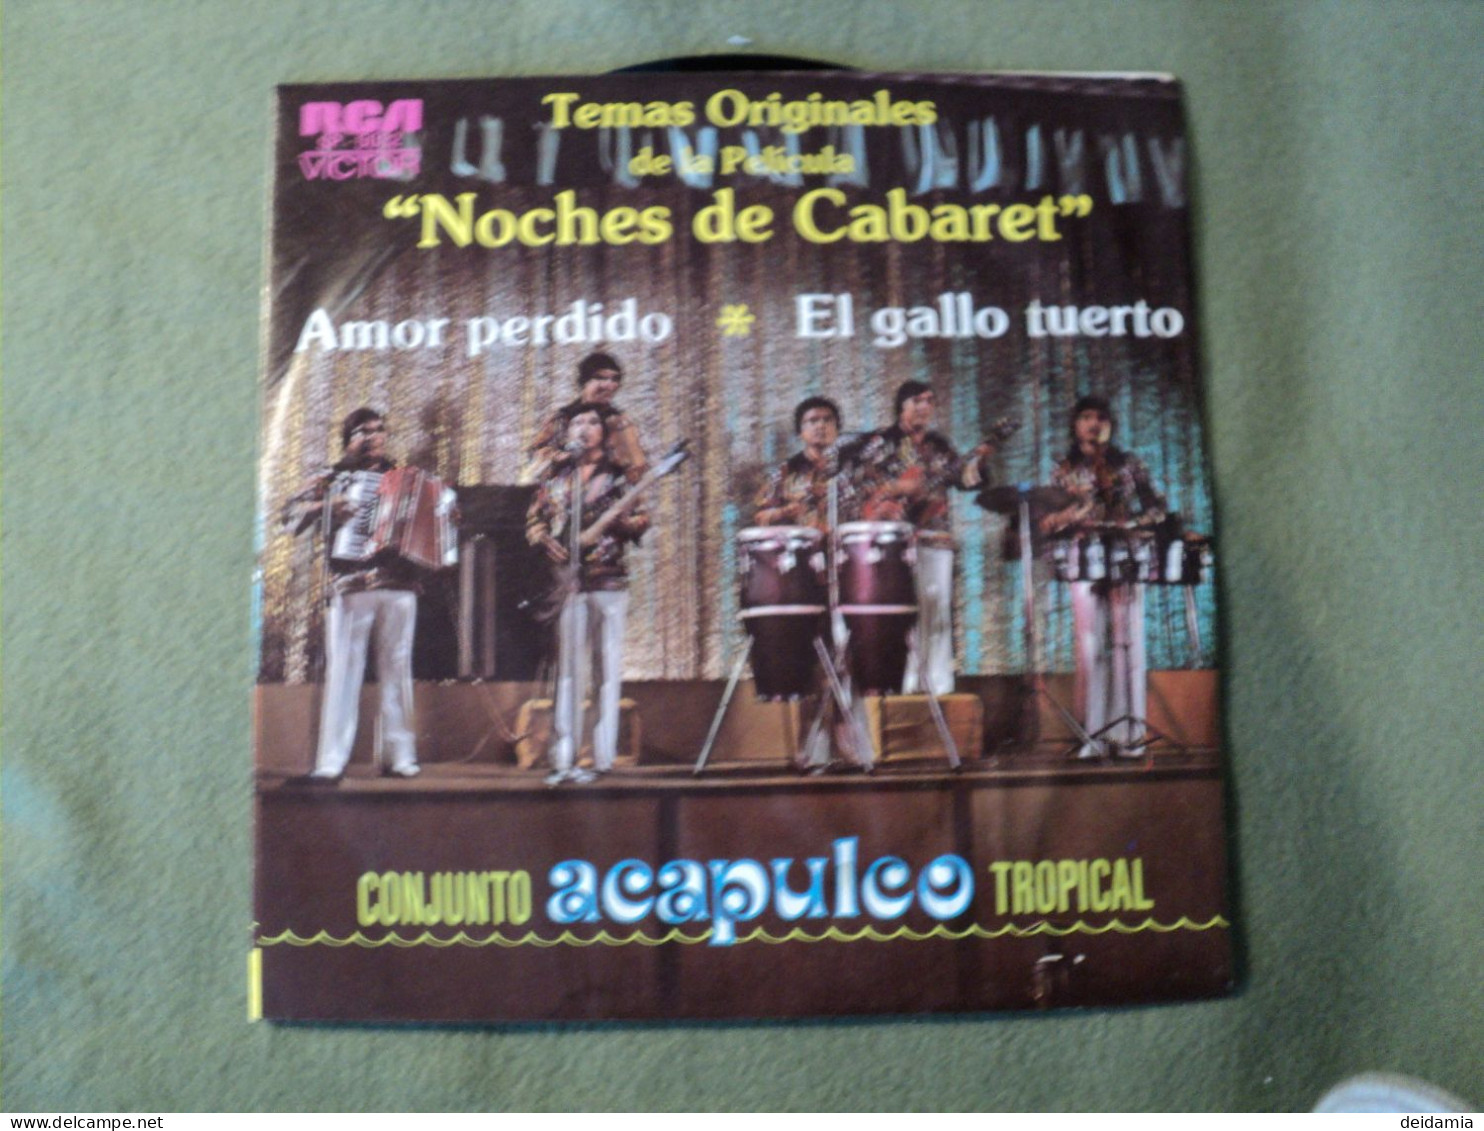 45 TOURS CONJUNTO ACAPULCO TROPICAL. 1978. RCA VICTOR 5032 DU FILM NOCHES DE CABARET. AMOR PERDIDO / EL GALLO TUERTO - World Music